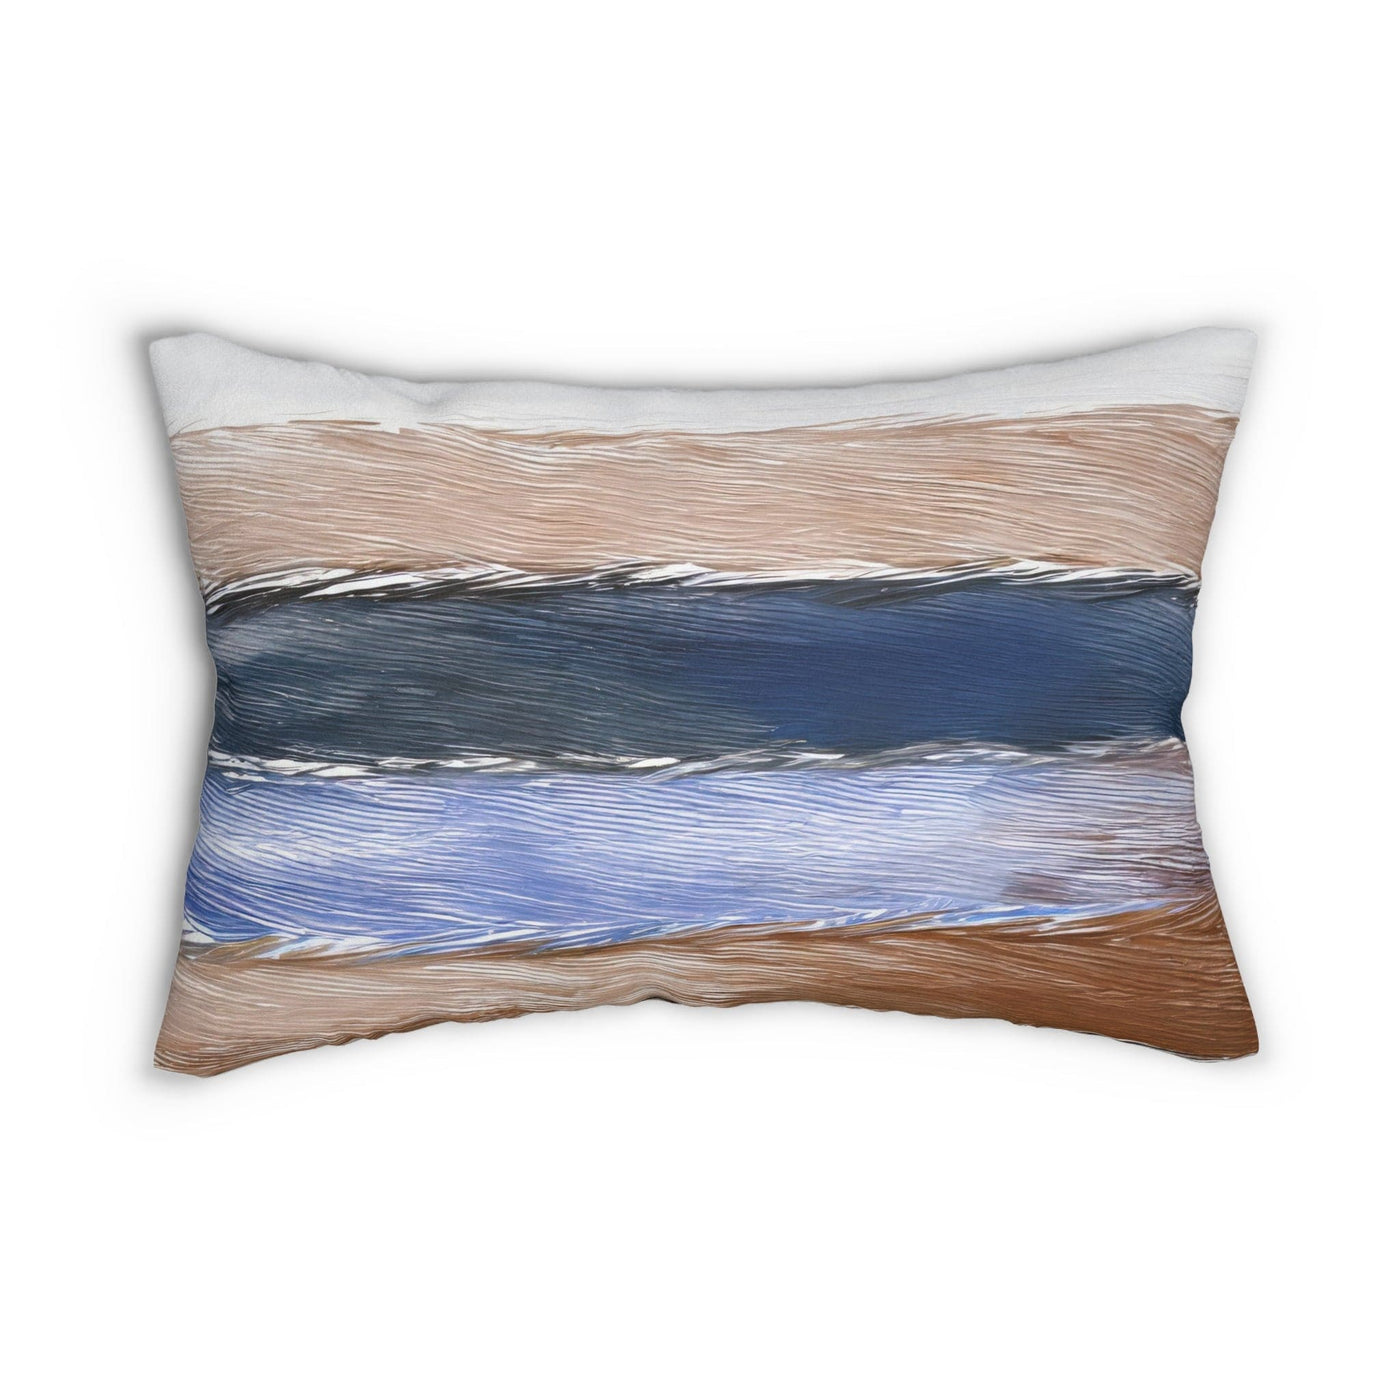 Decorative Lumbar Pillow Rustic Hues Pattern - Home Decor